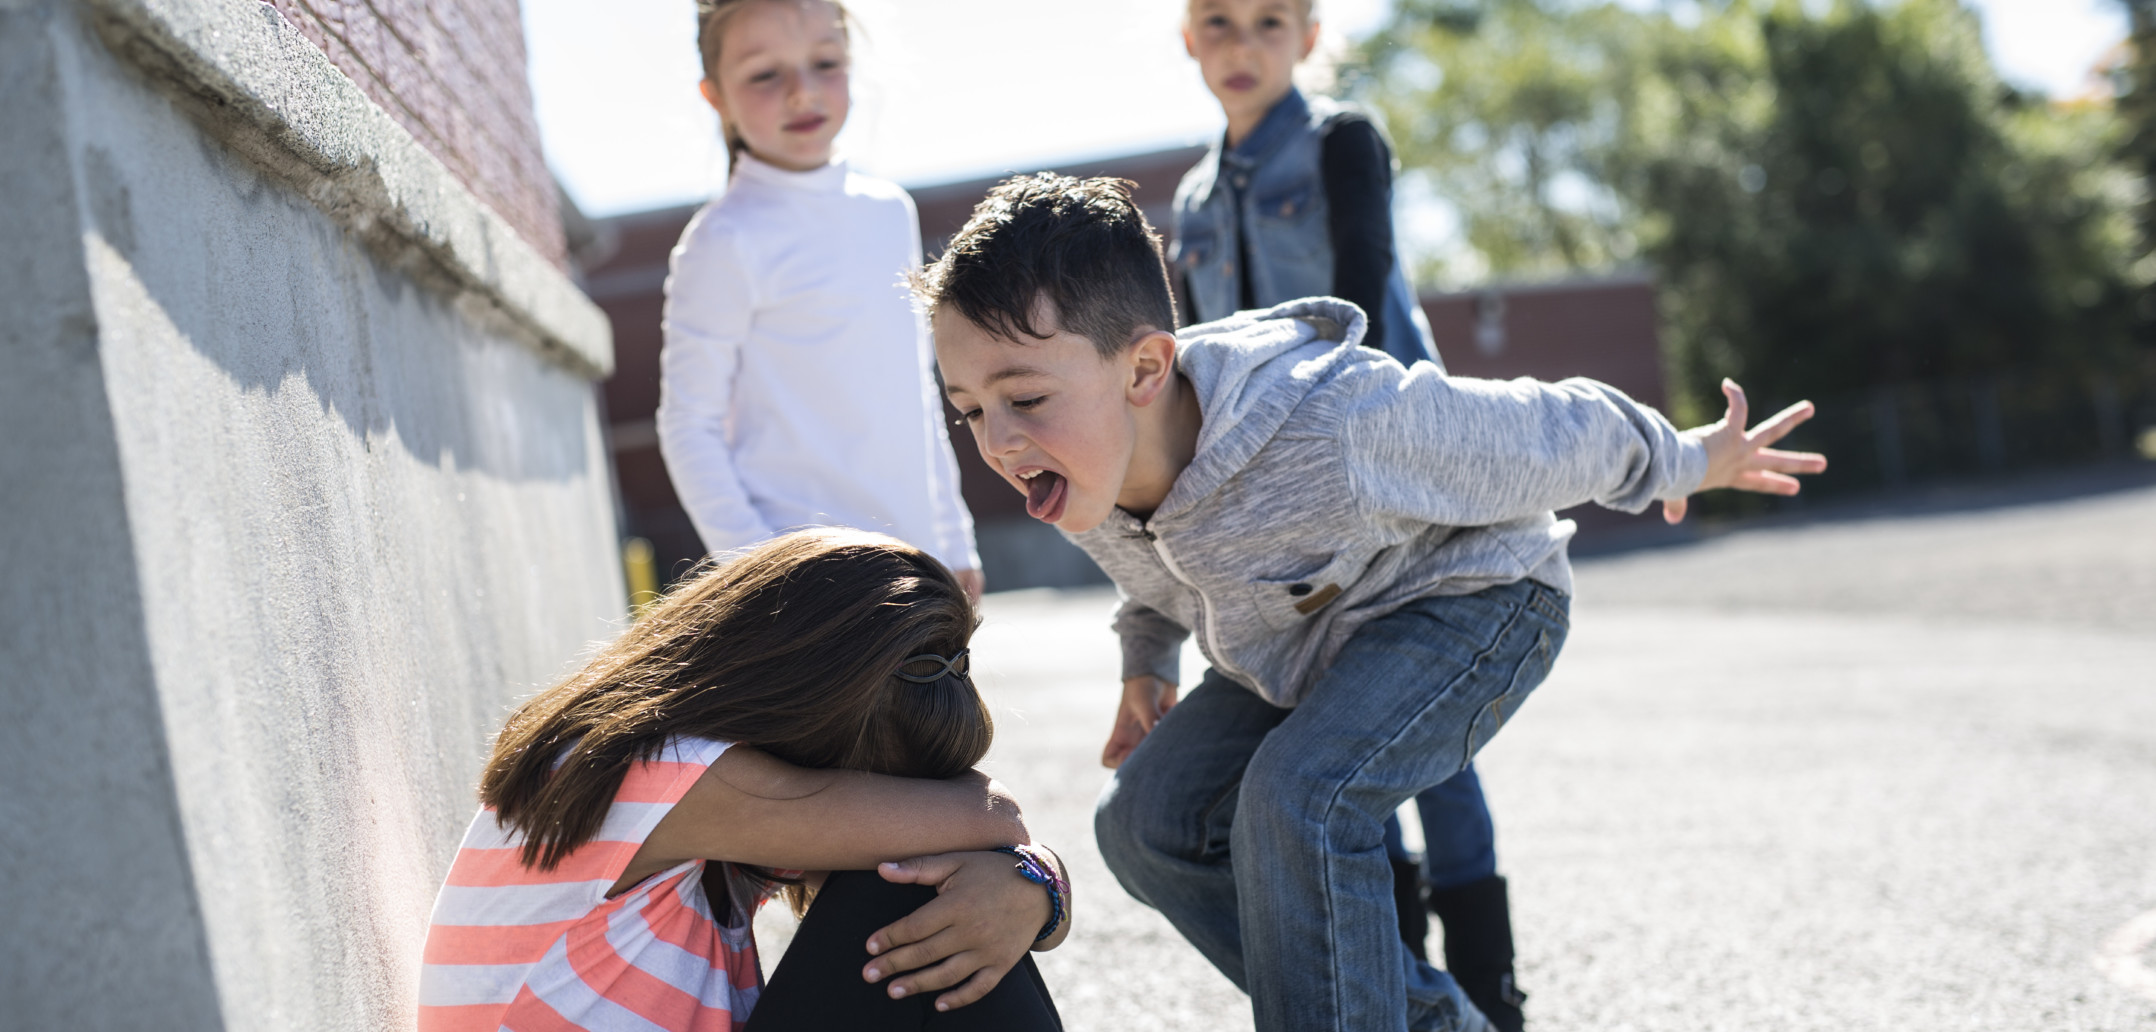 teach-your-children-this-trick-to-stop-bullies-school-mum